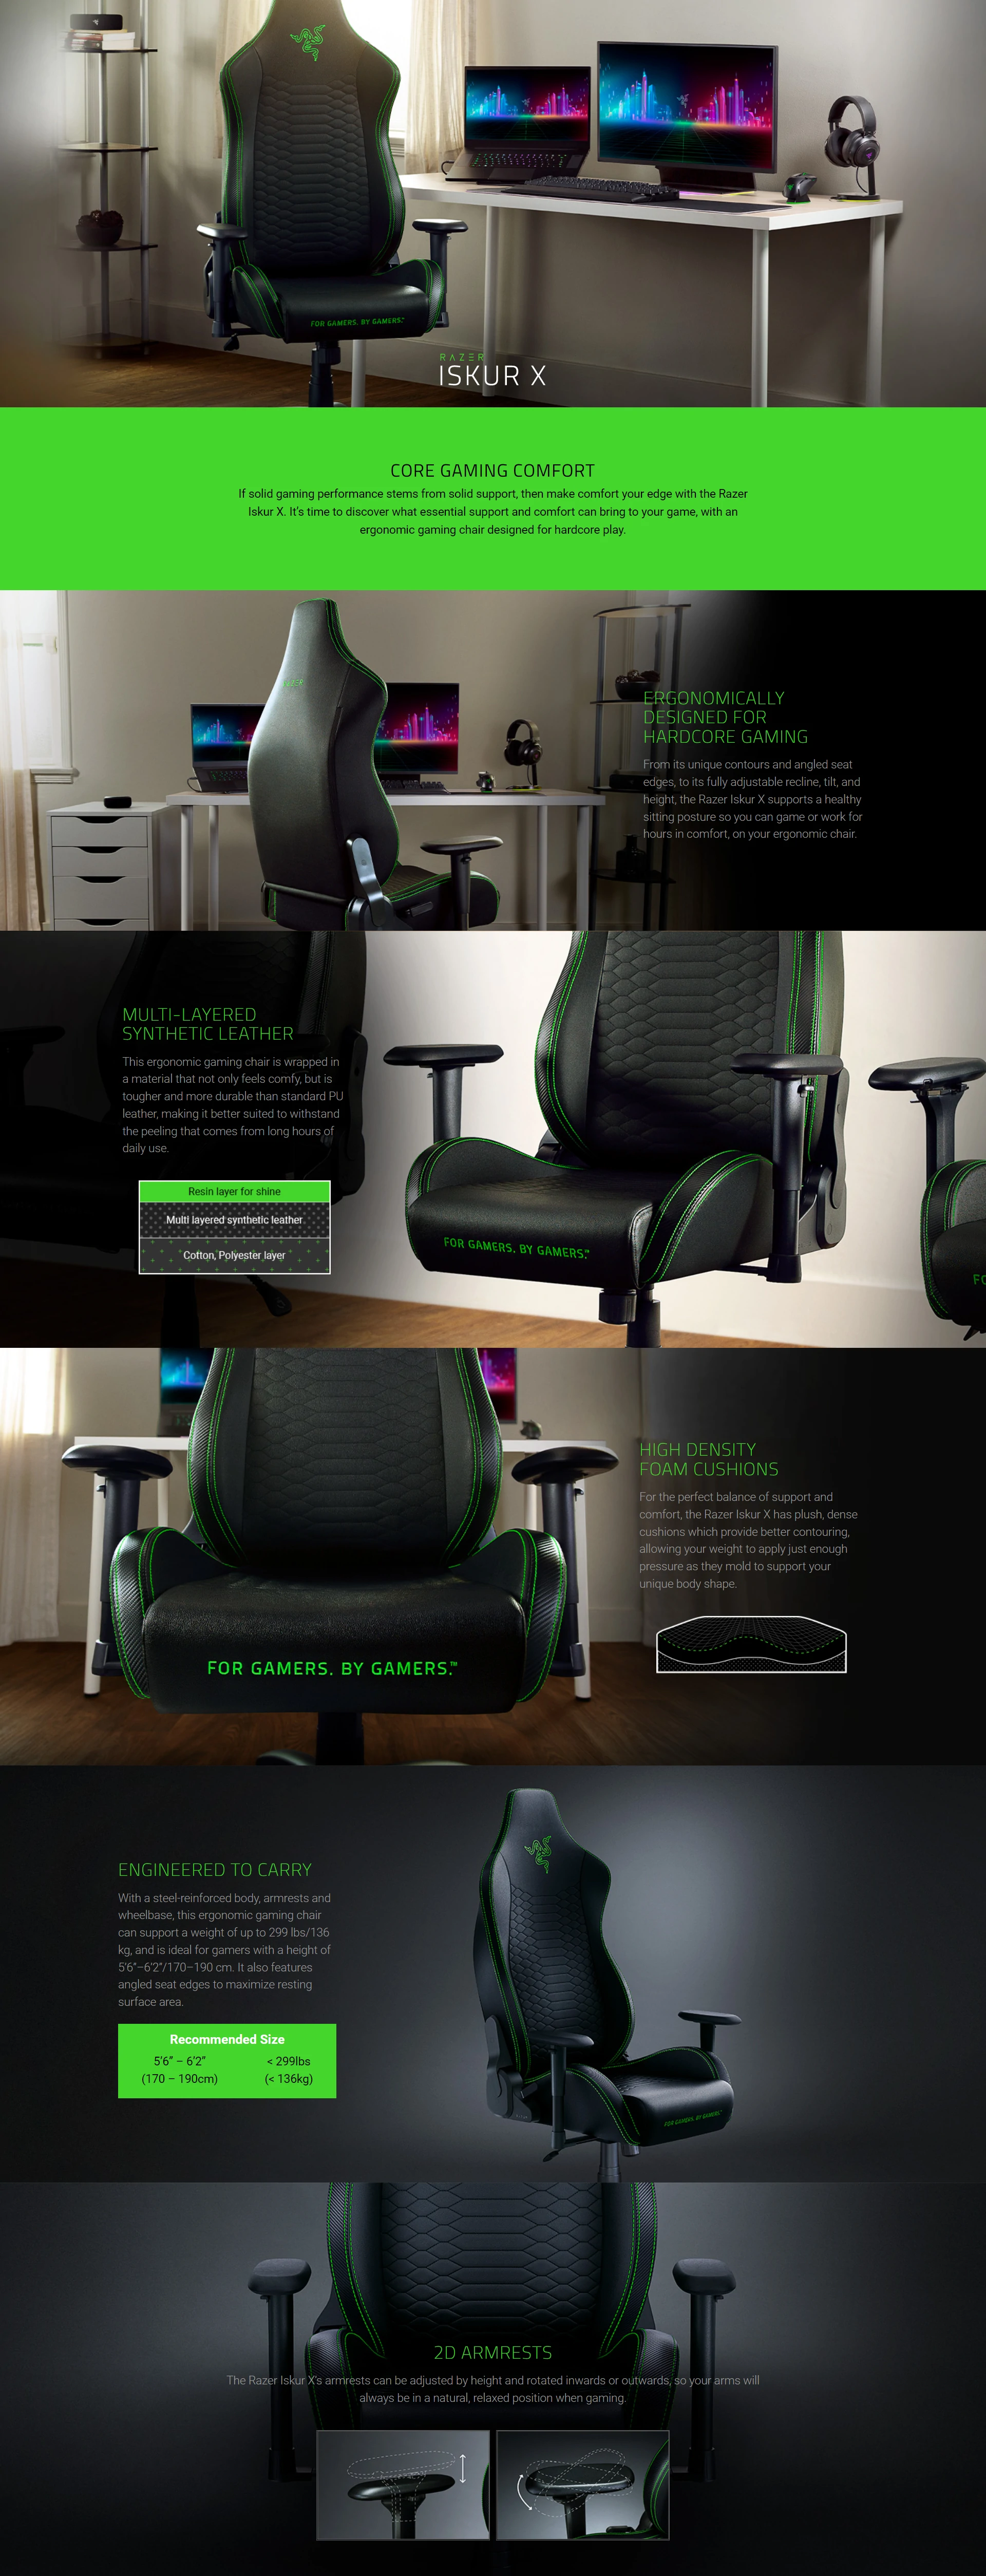 Overview - Razer Iskur X Ergonomic Gaming Chair